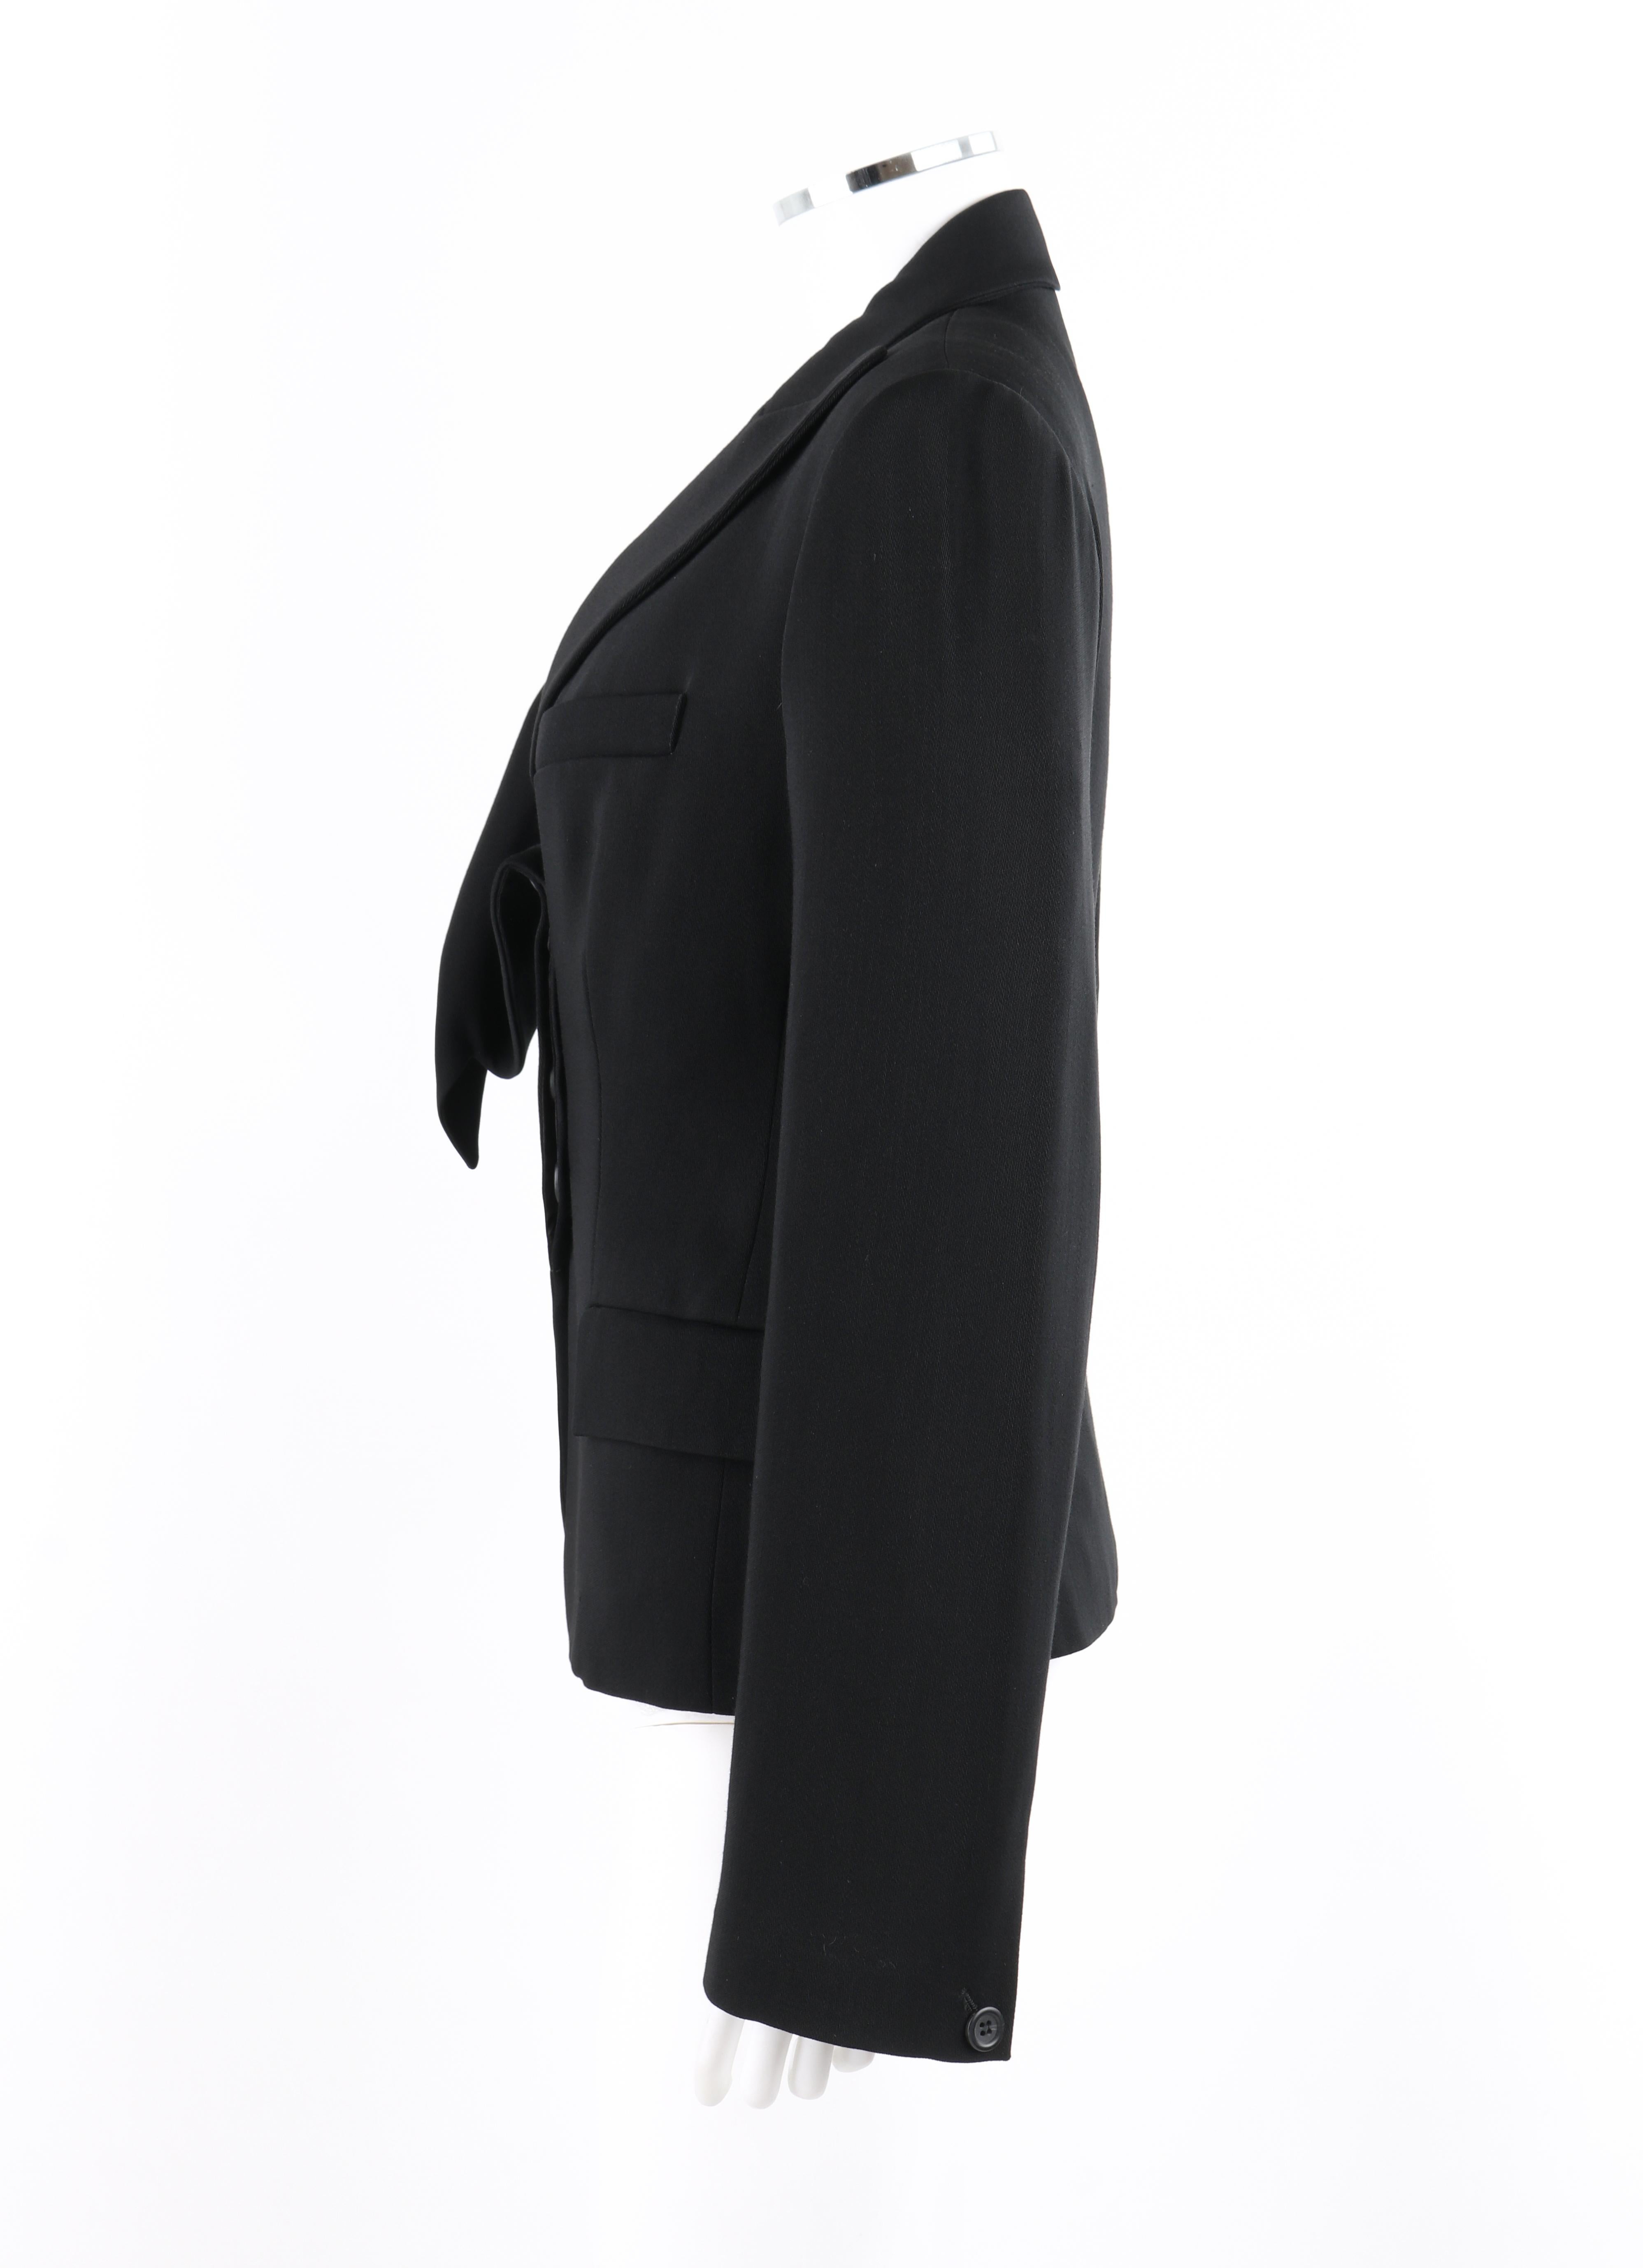 Women's ALEXANDER McQUEEN A/W 1996 “Dante” Black Blazer Jacket w/ Hair + Birth Label For Sale